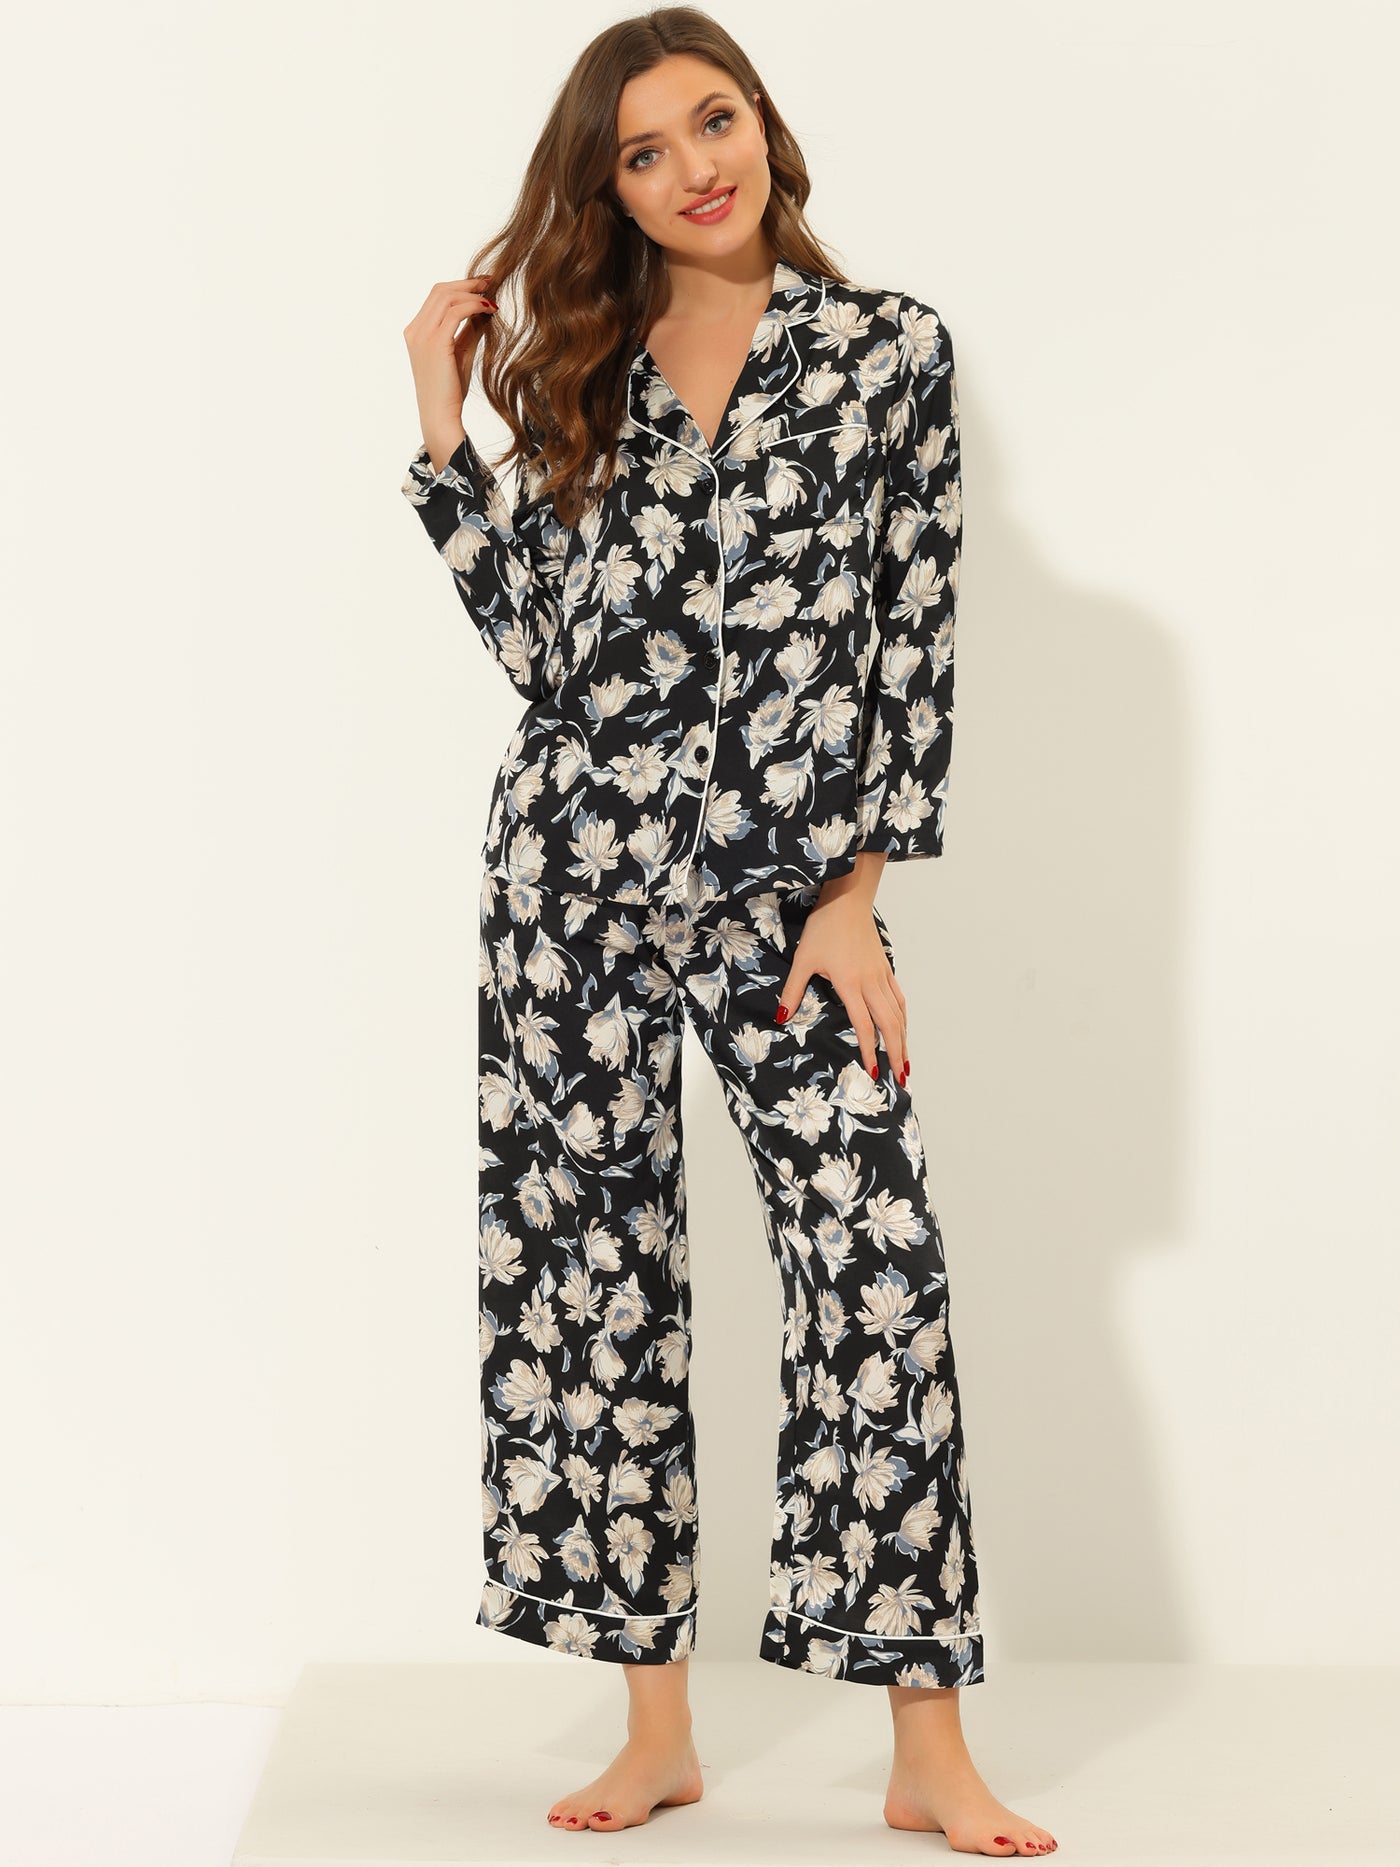 Bublédon Women's Sleep Nightwear Sleepwear Lounge Satin Pajama Sets